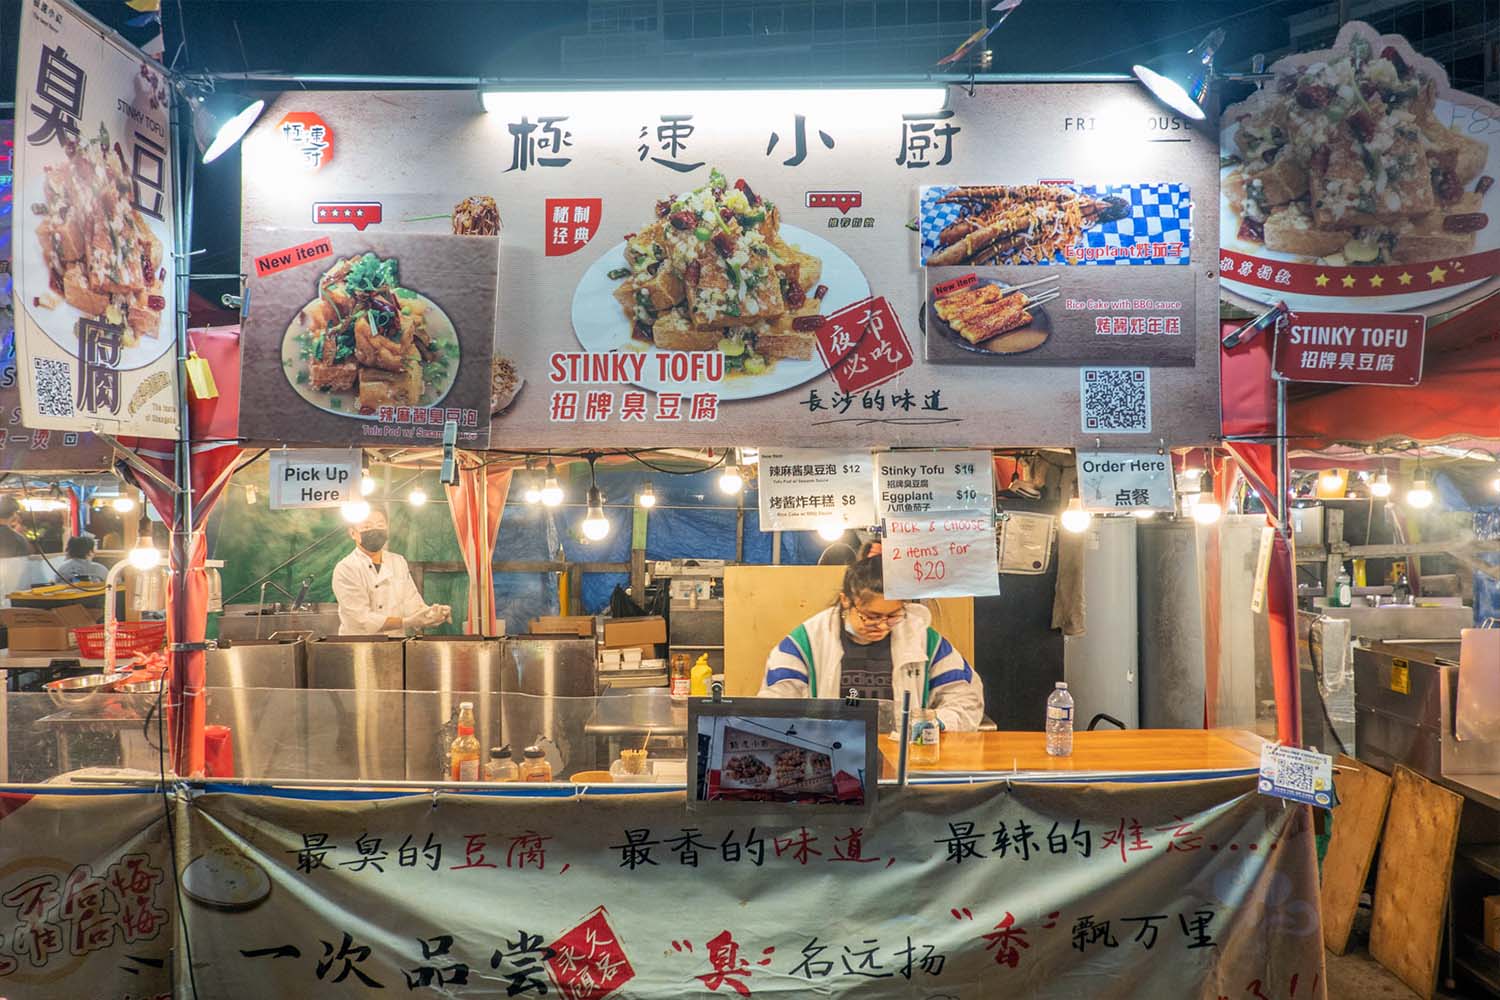 A stinky tofu stall